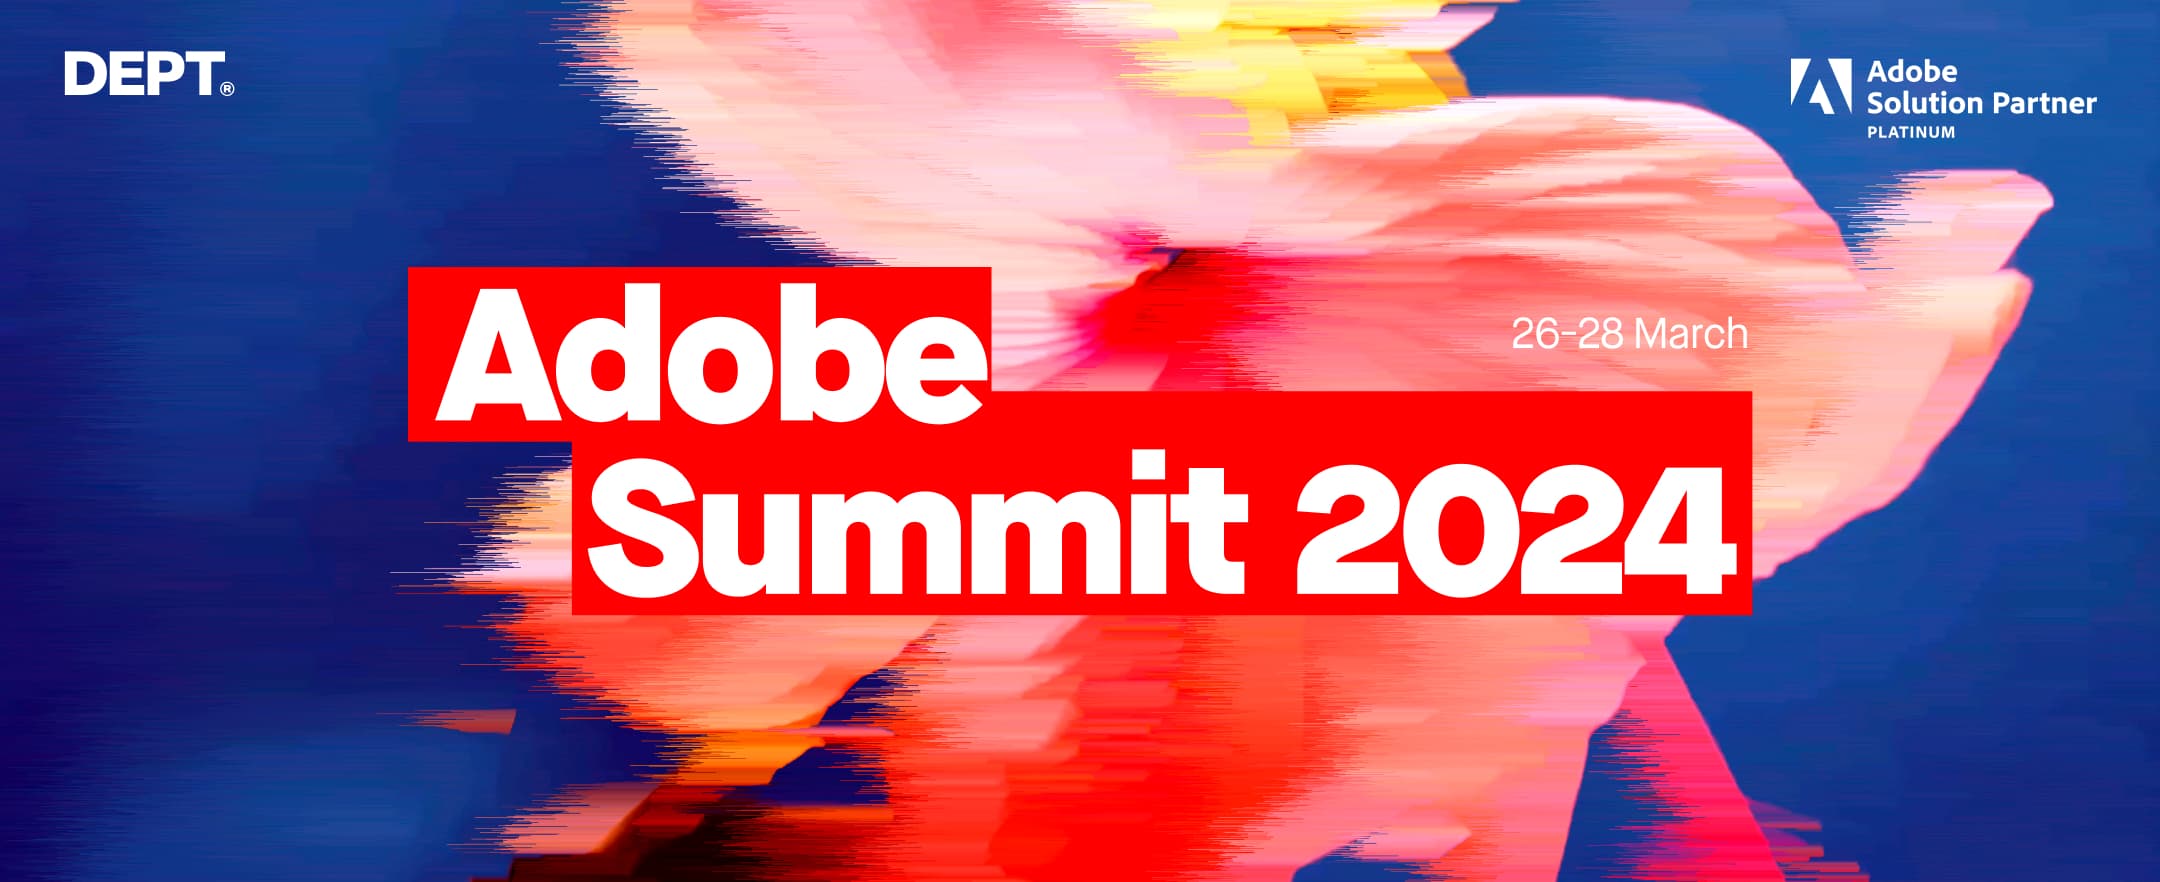 DEPT® is returning to Adobe Summit